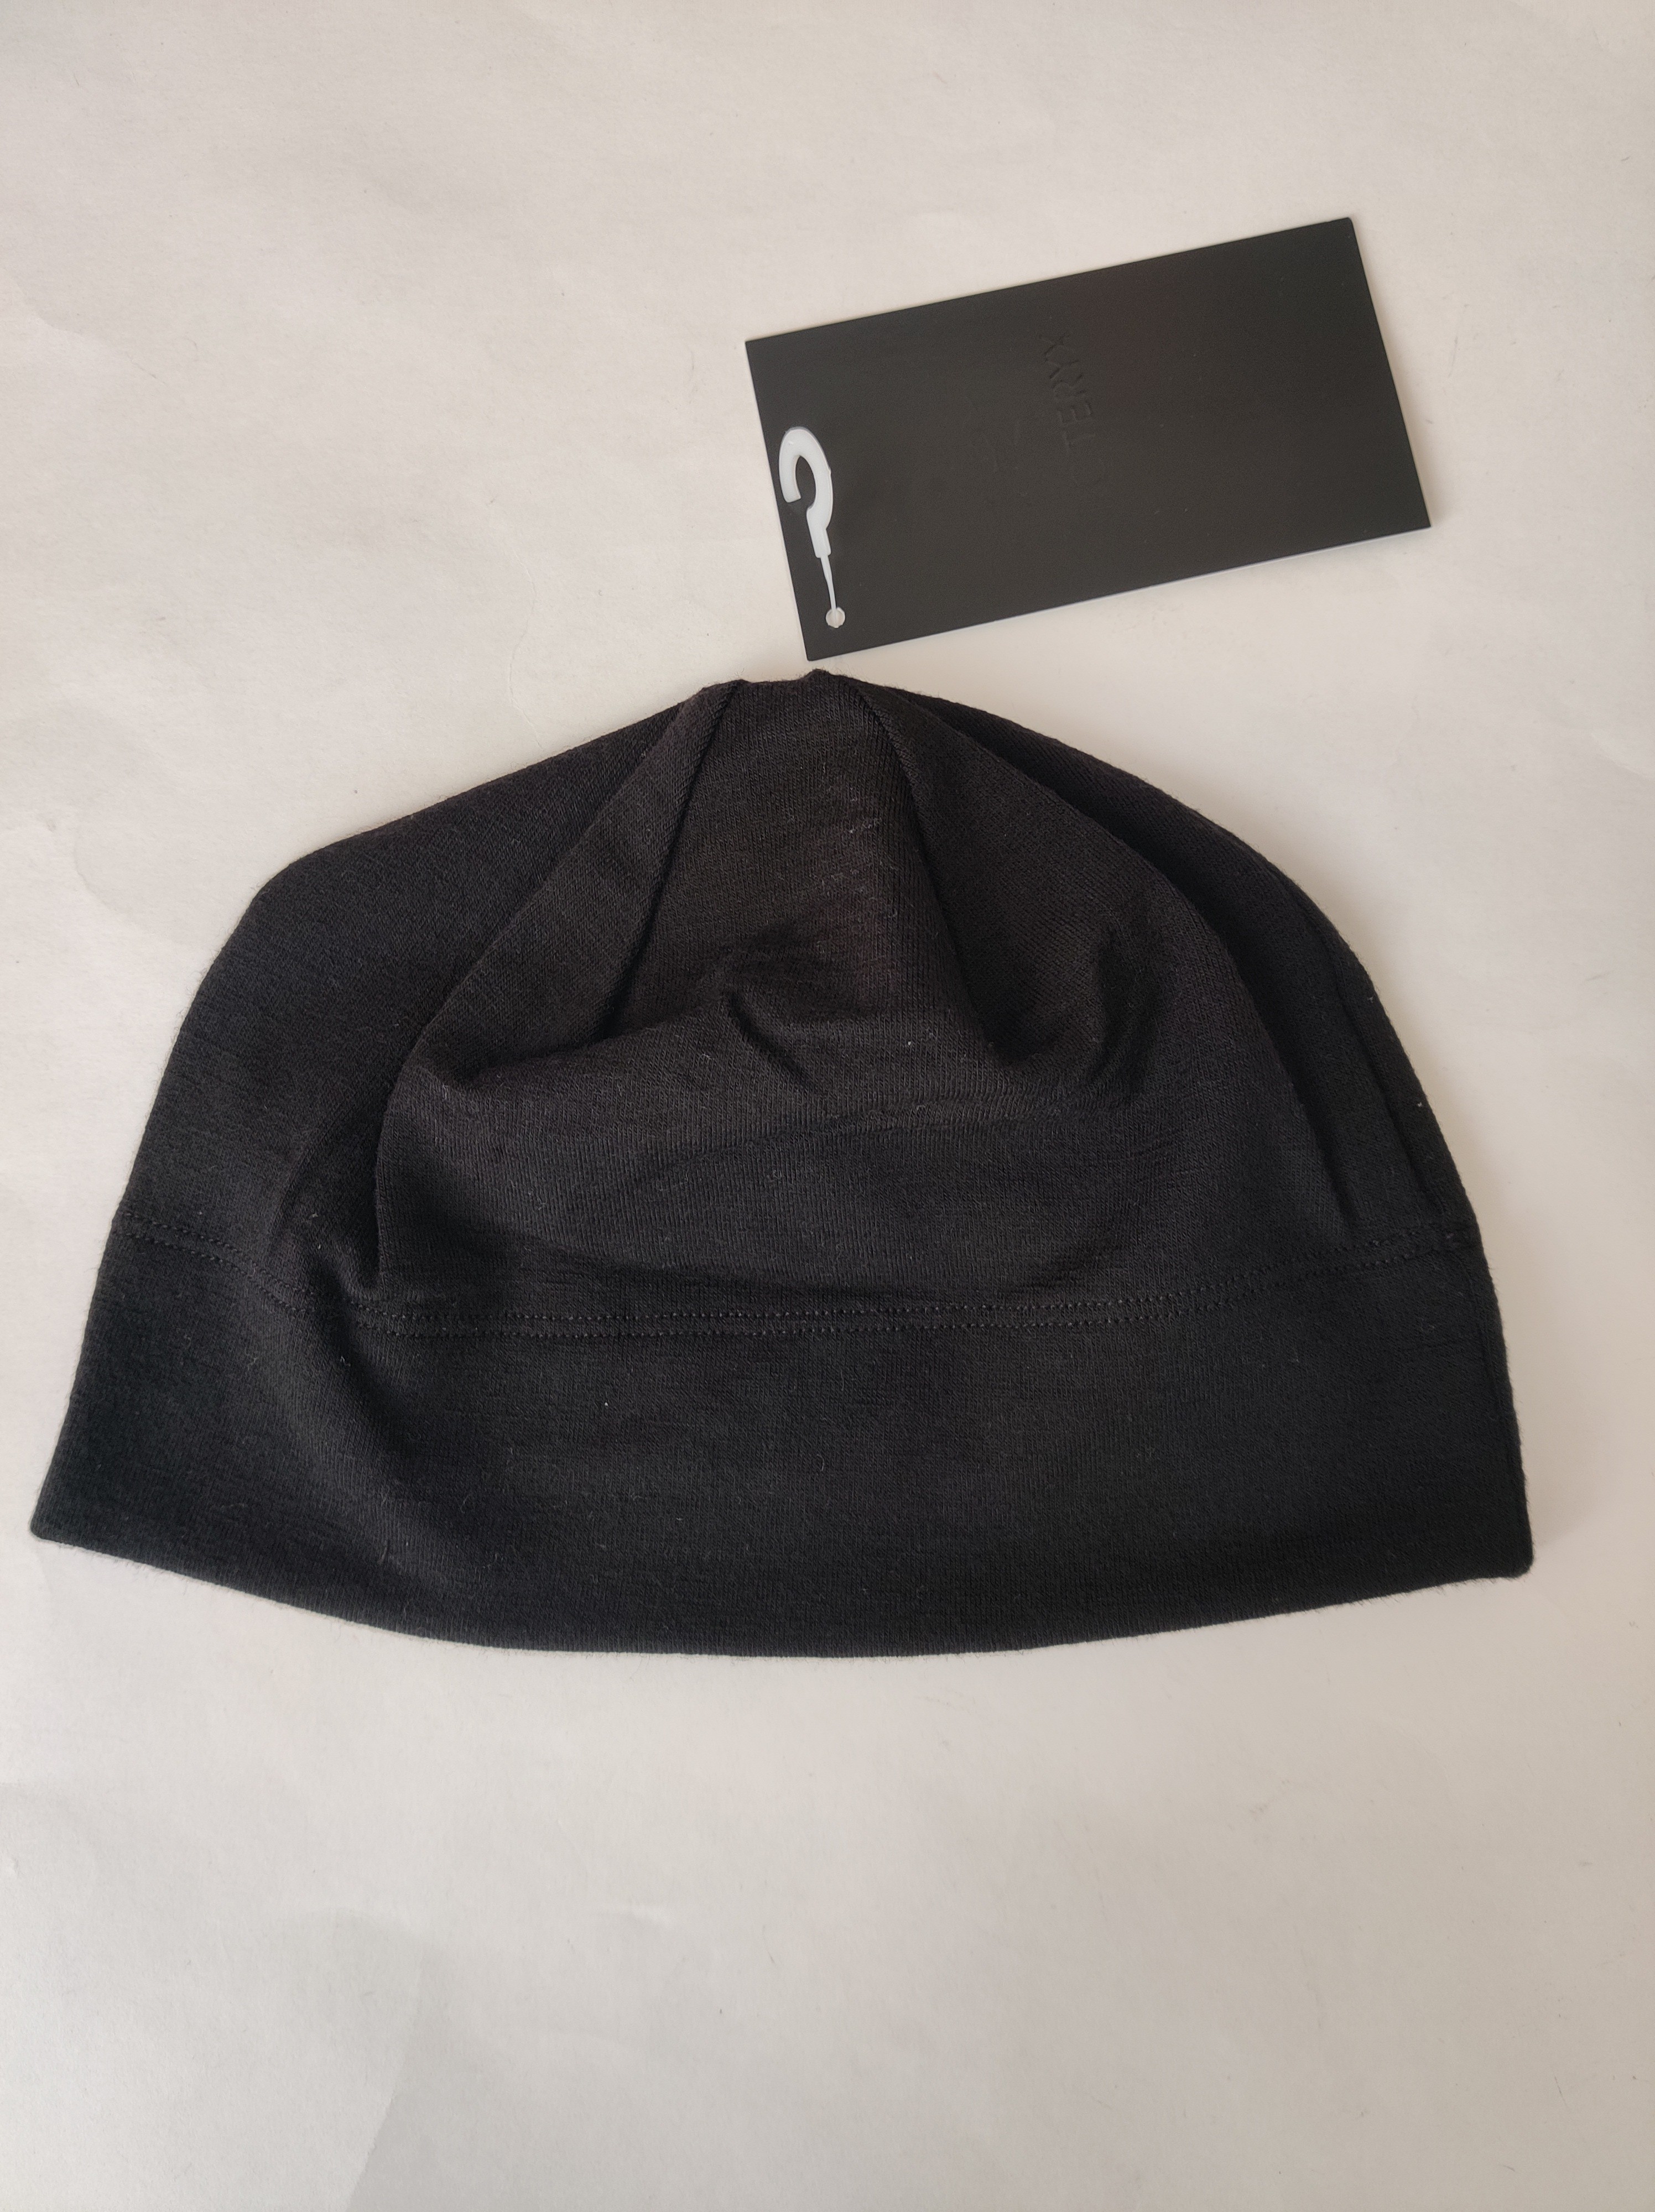 Rho LTW Merino Wool Beanie Thin Hat Winter Black Travel Outdoor Cap - 4